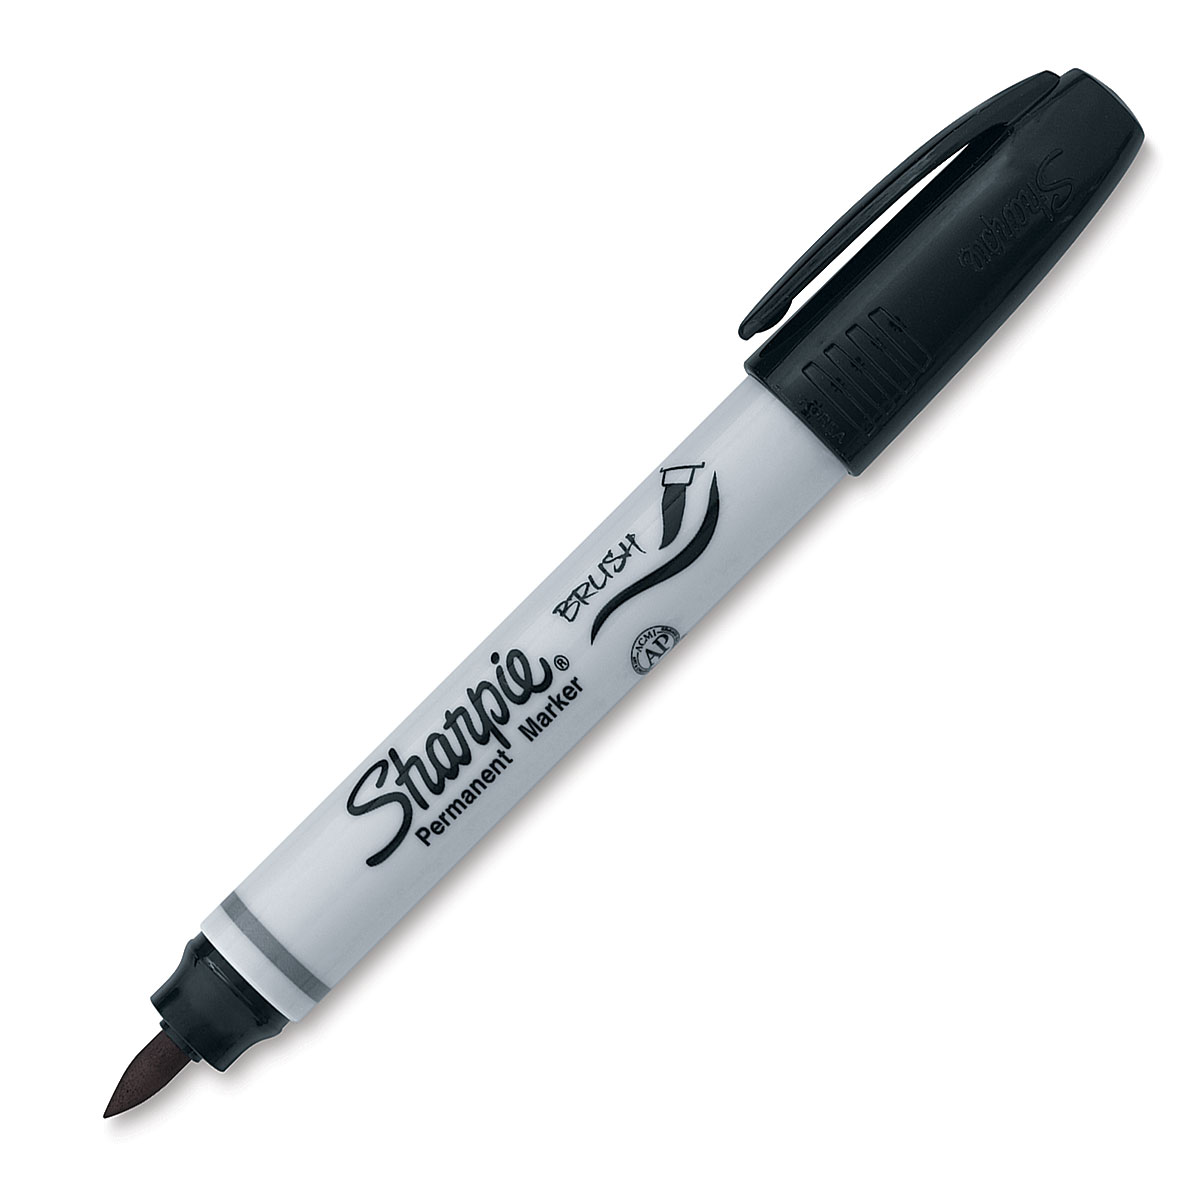 Review of the Sharpie Brush Tip Permanent Marker #Sharpie #JetPens  #Zentangle